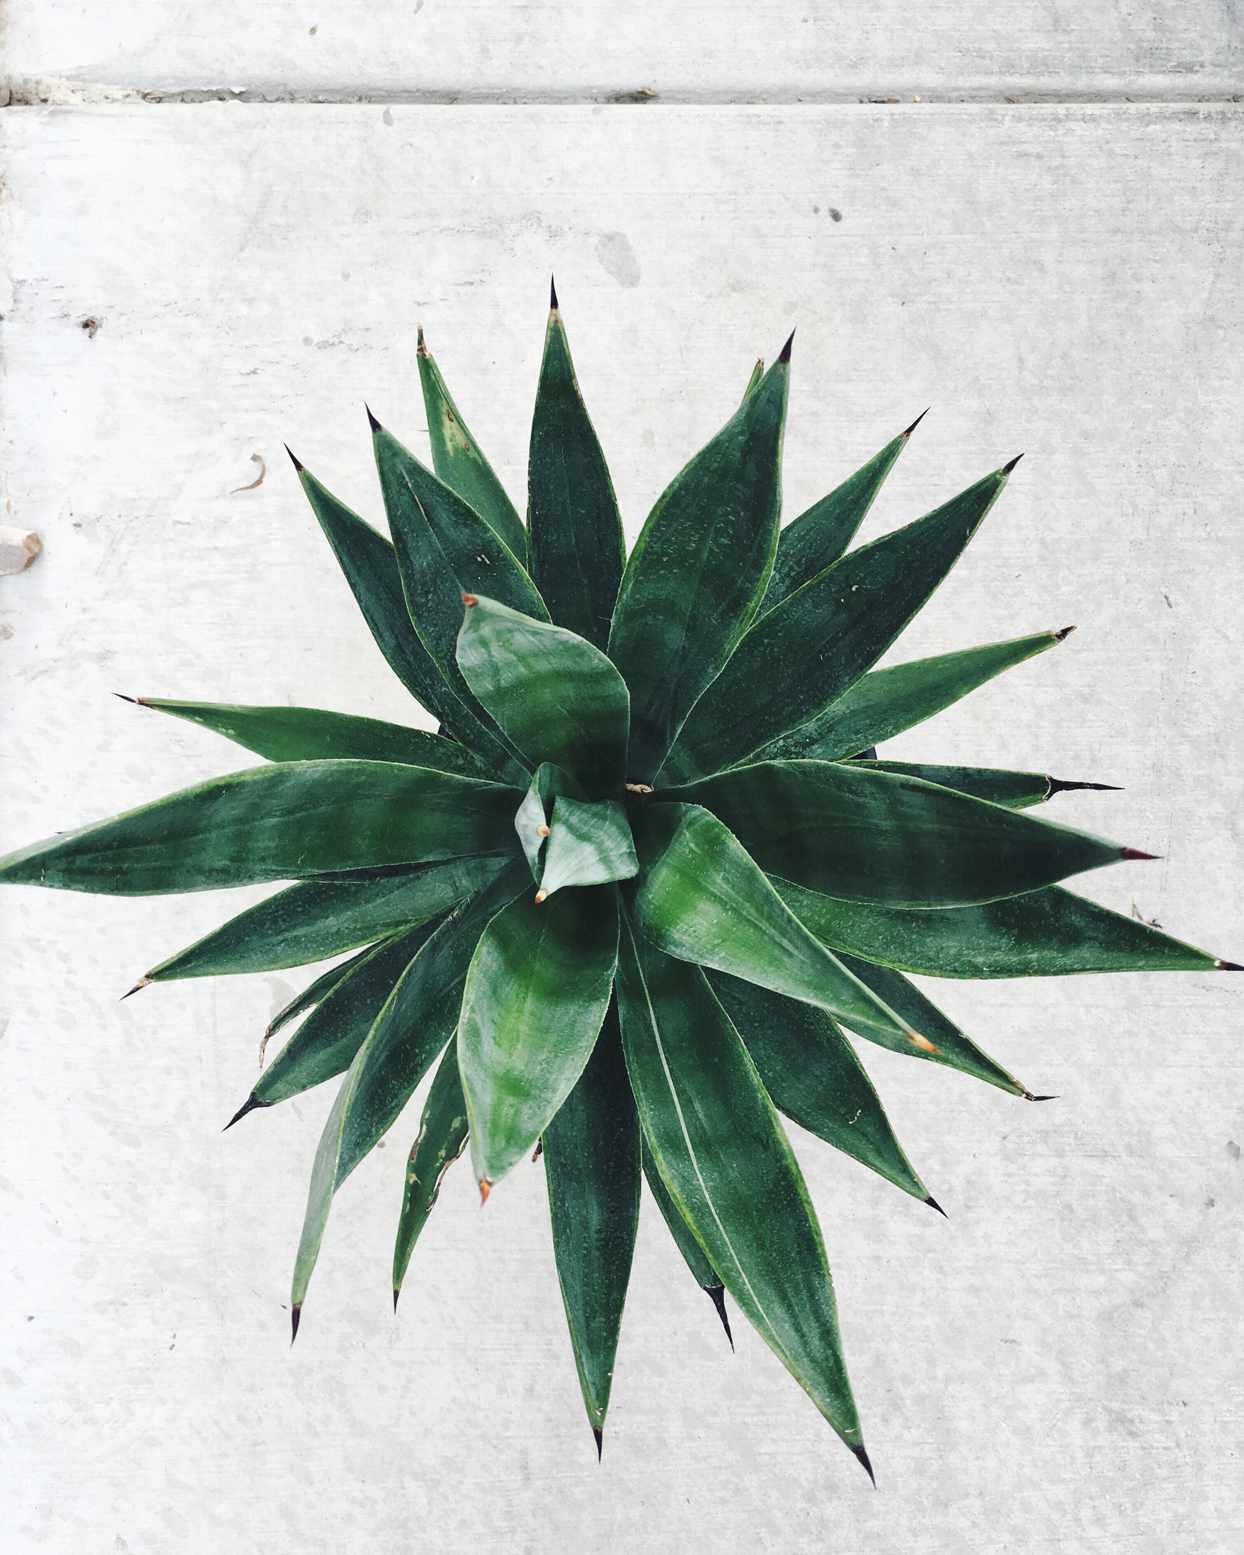 Century Plant (Agave americana)